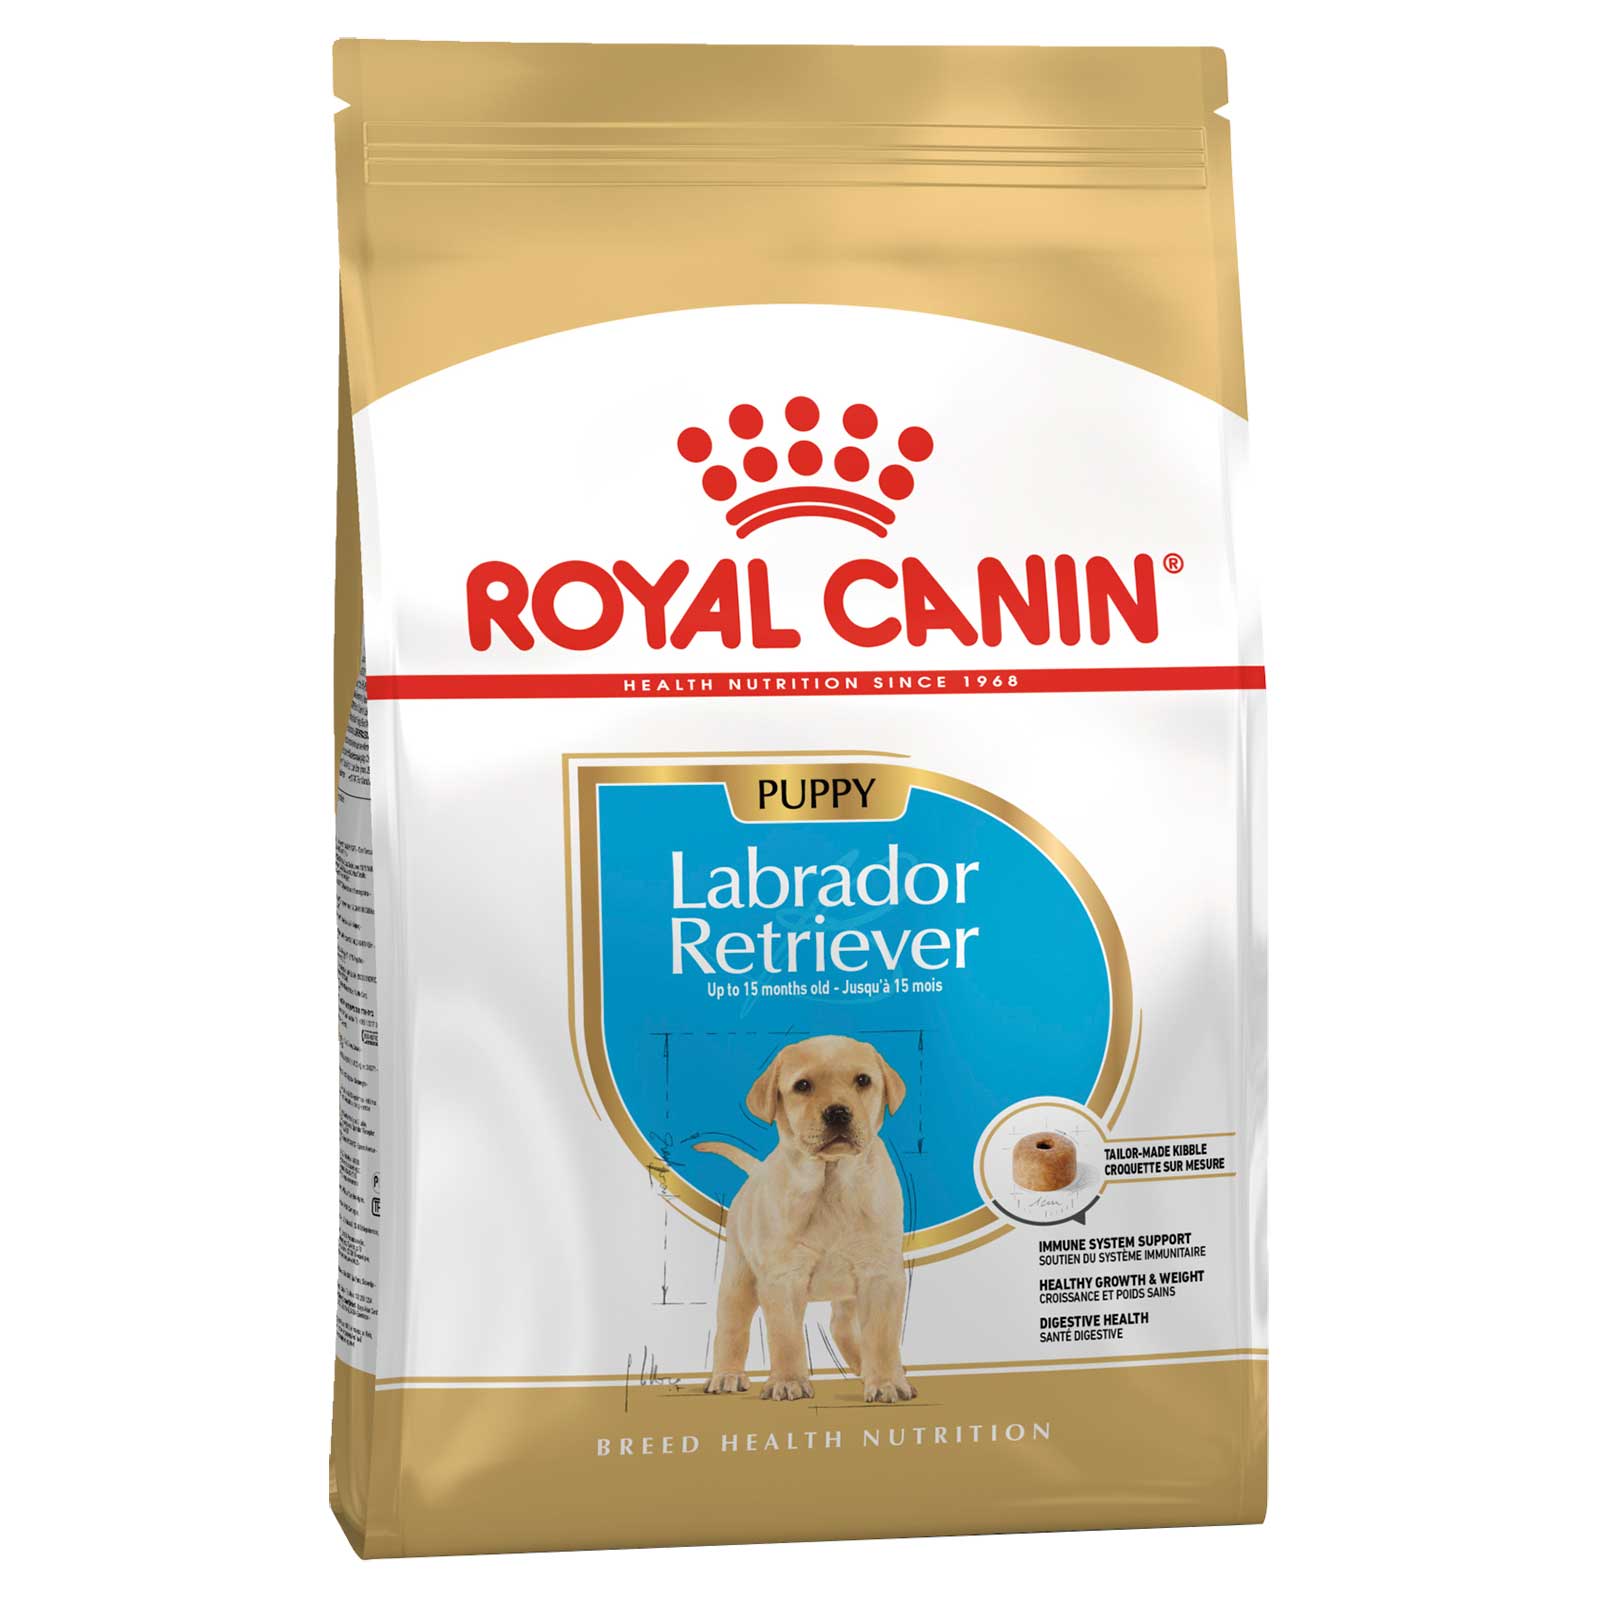 Royal Canin Dog Food Puppy Labrador